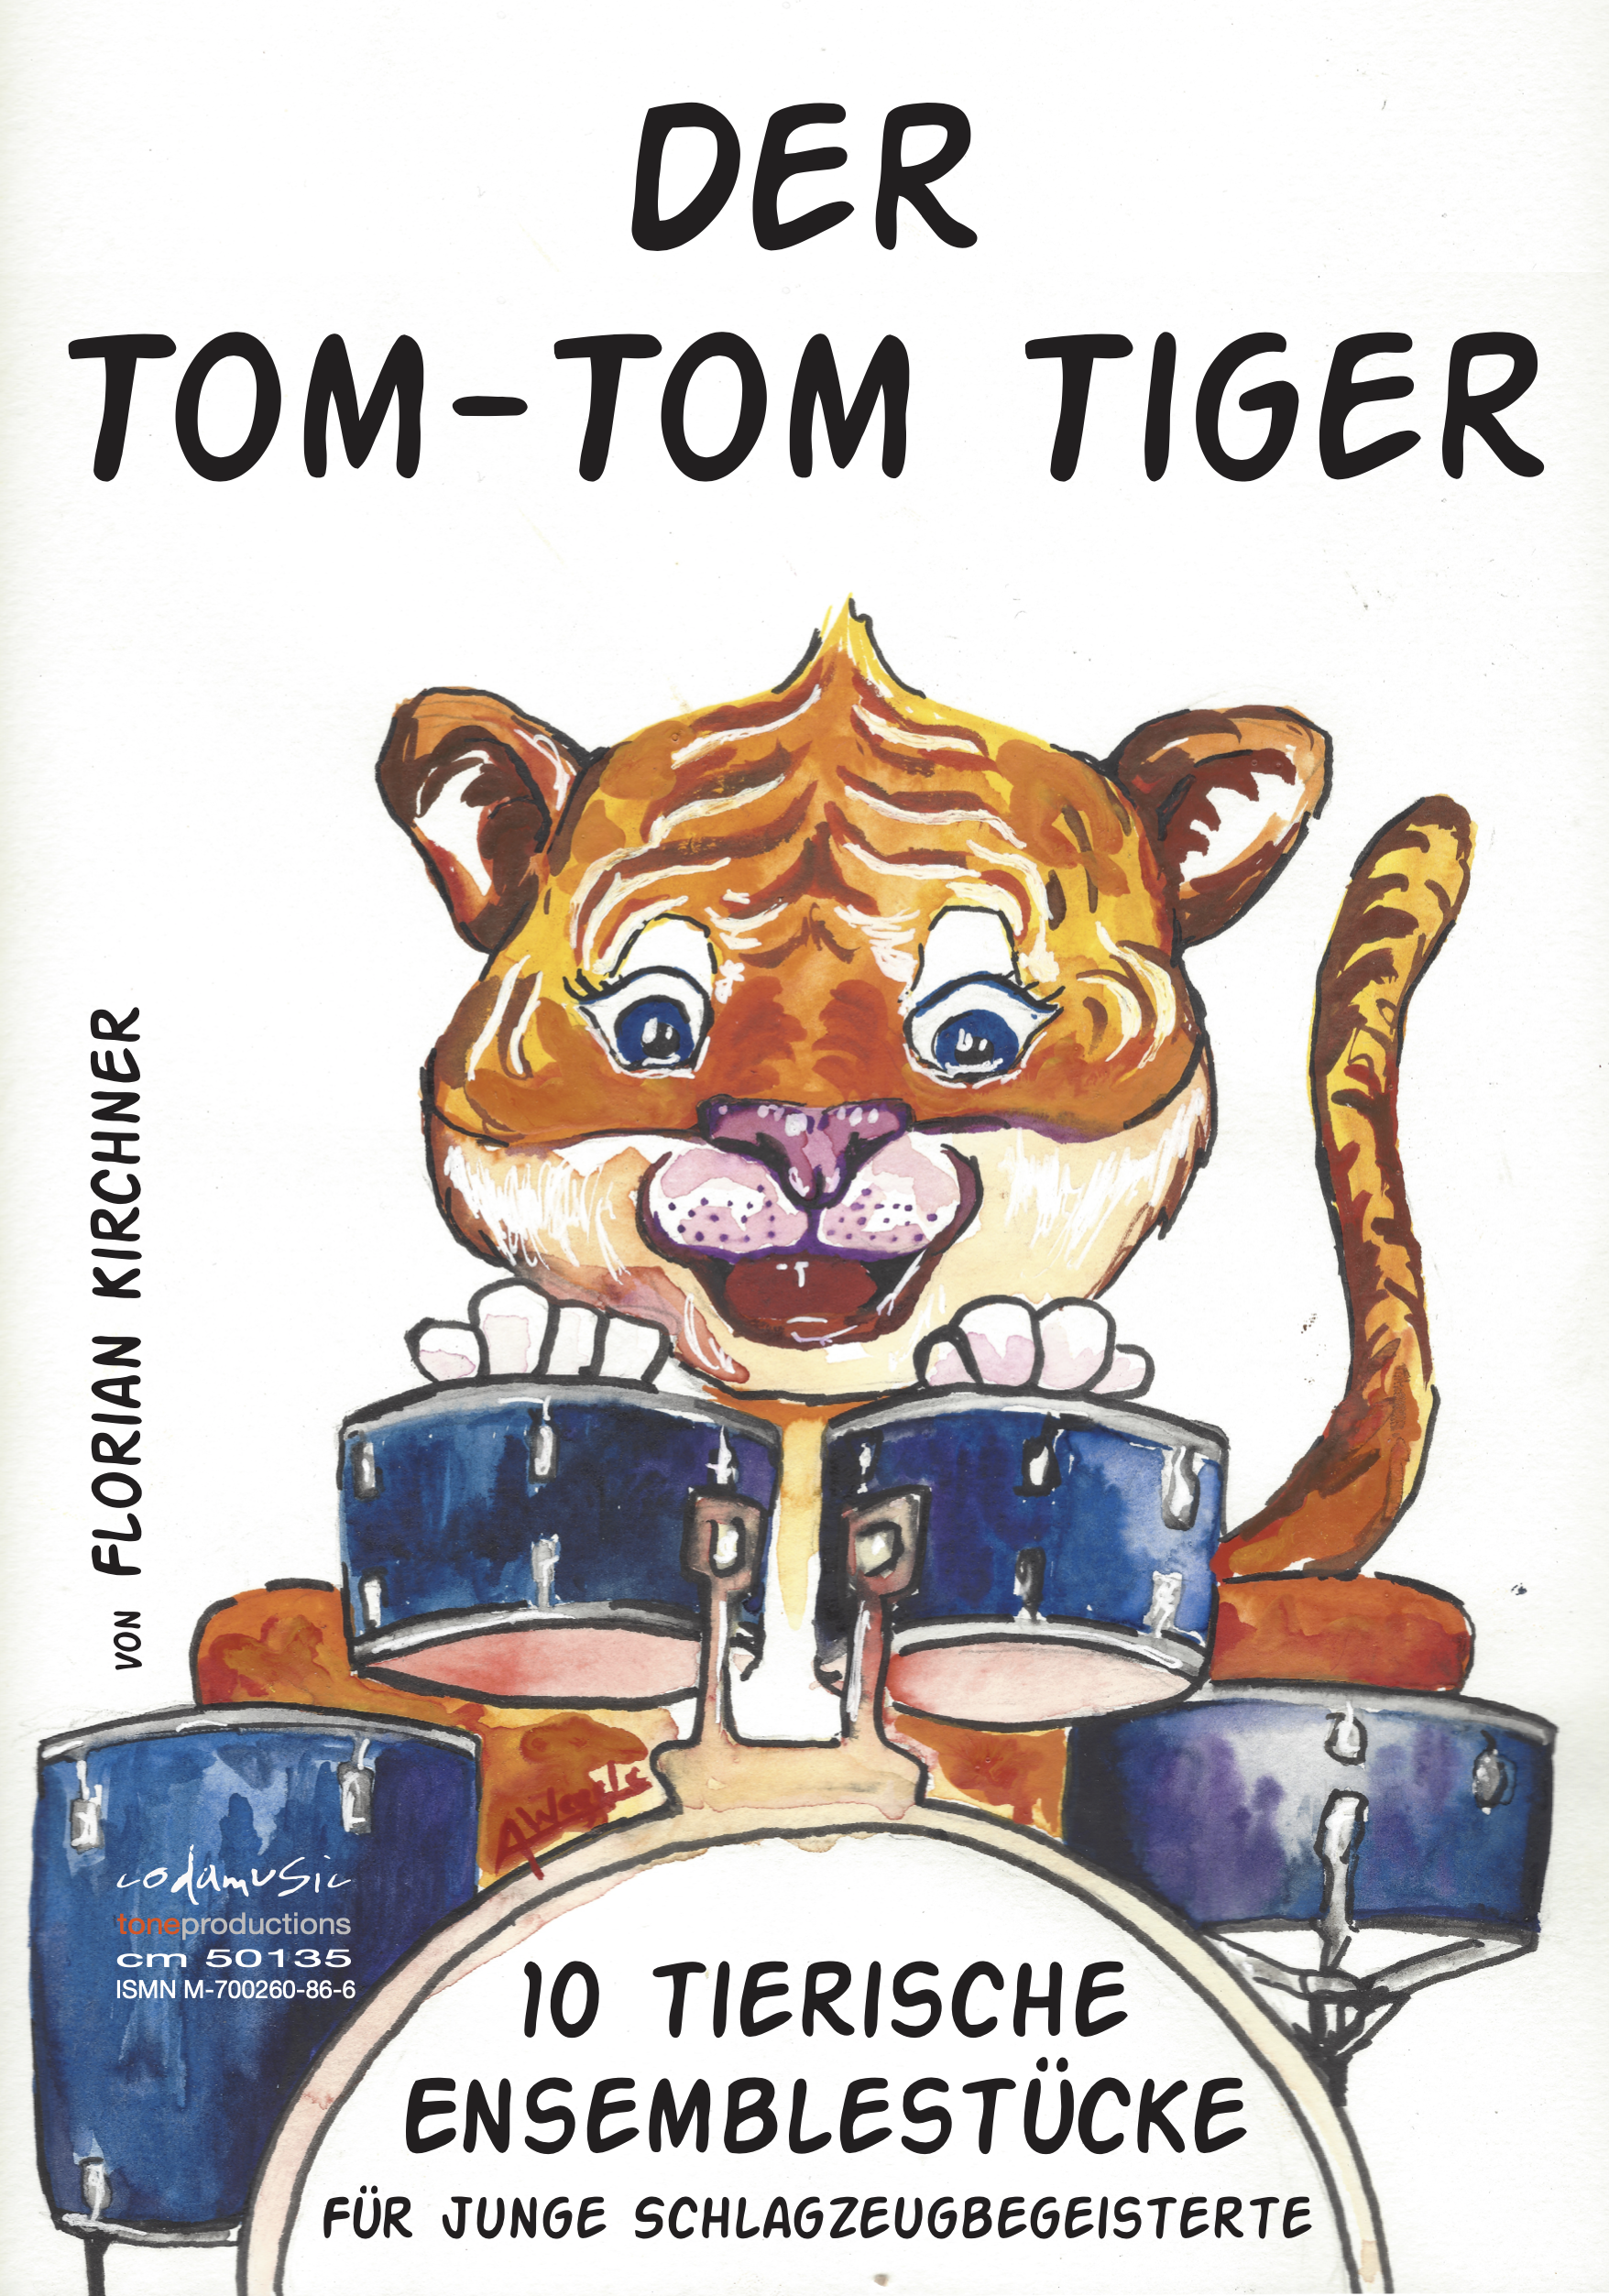 TOM-TOM TIGER